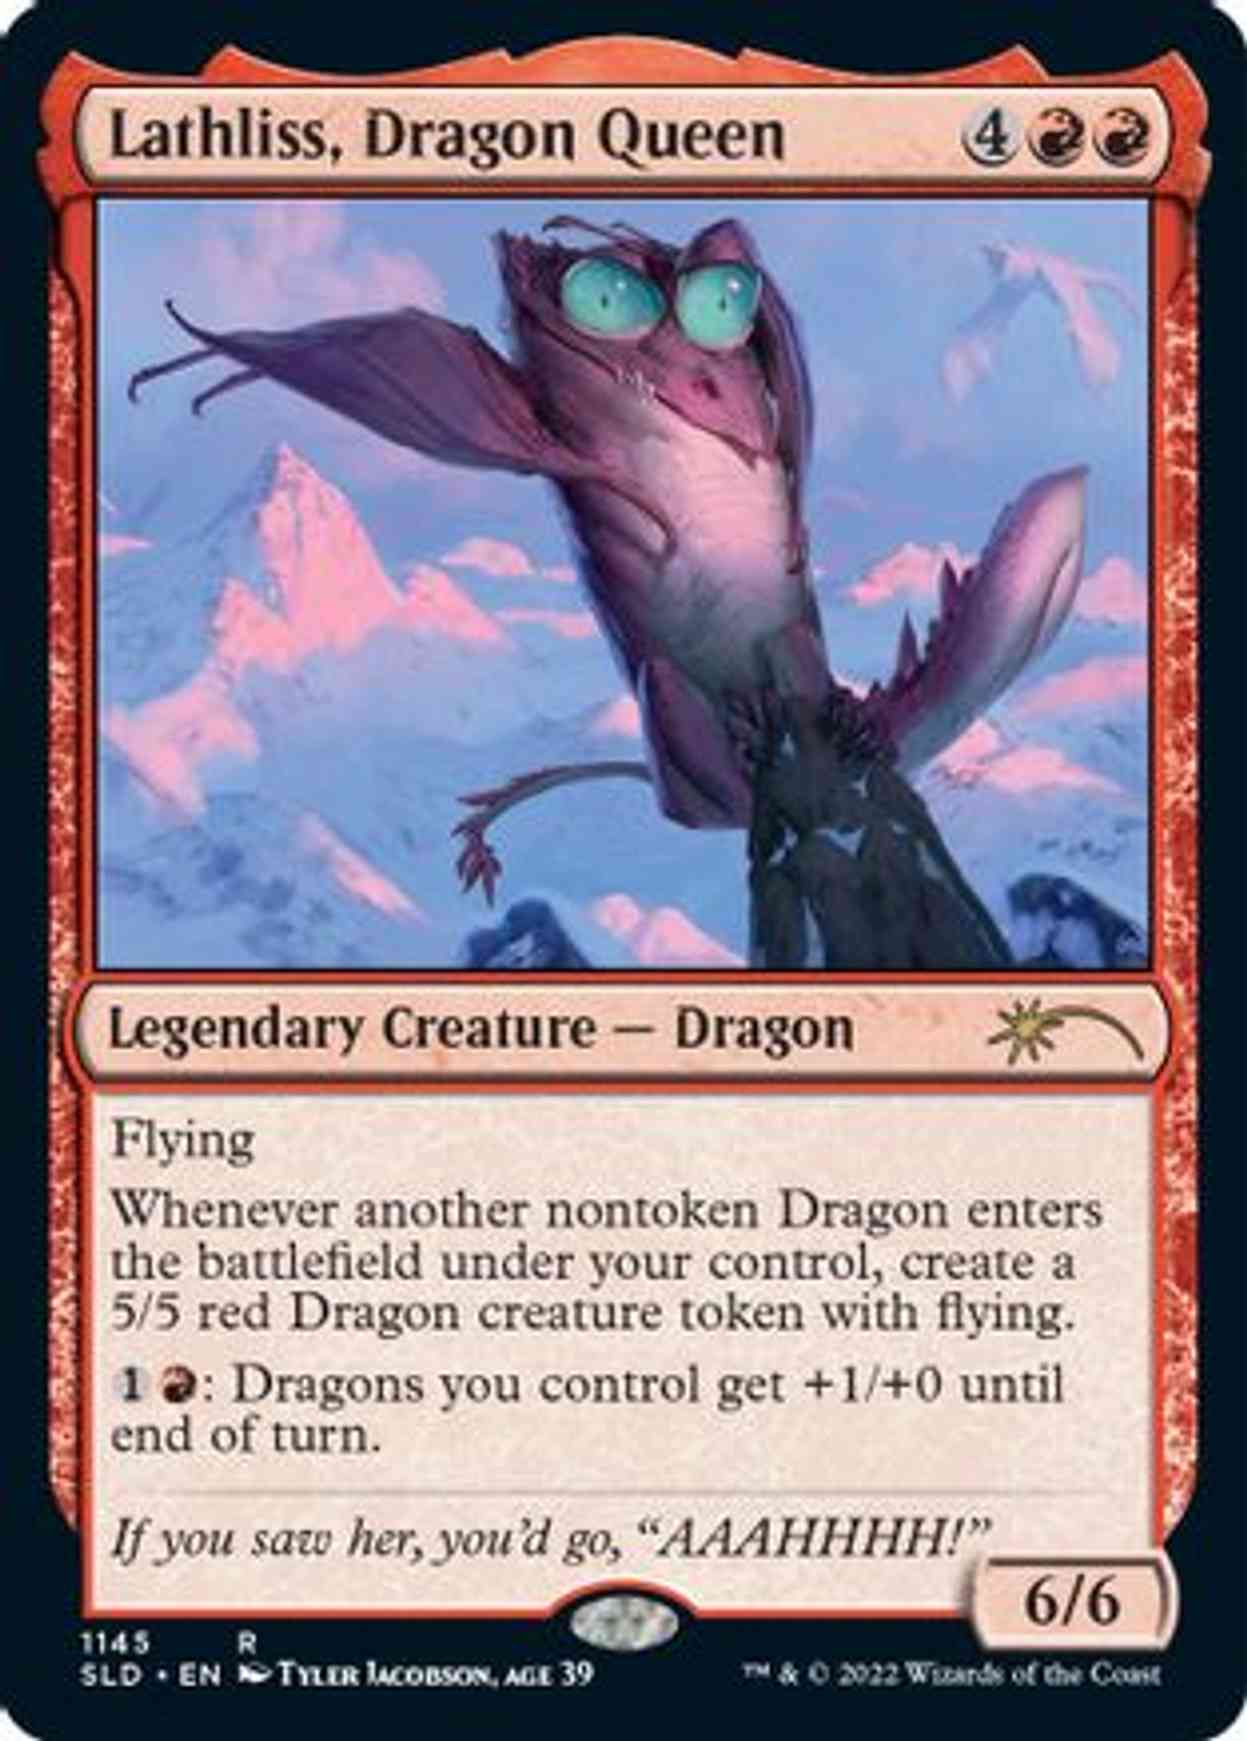 Lathliss, Dragon Queen (1145) magic card front